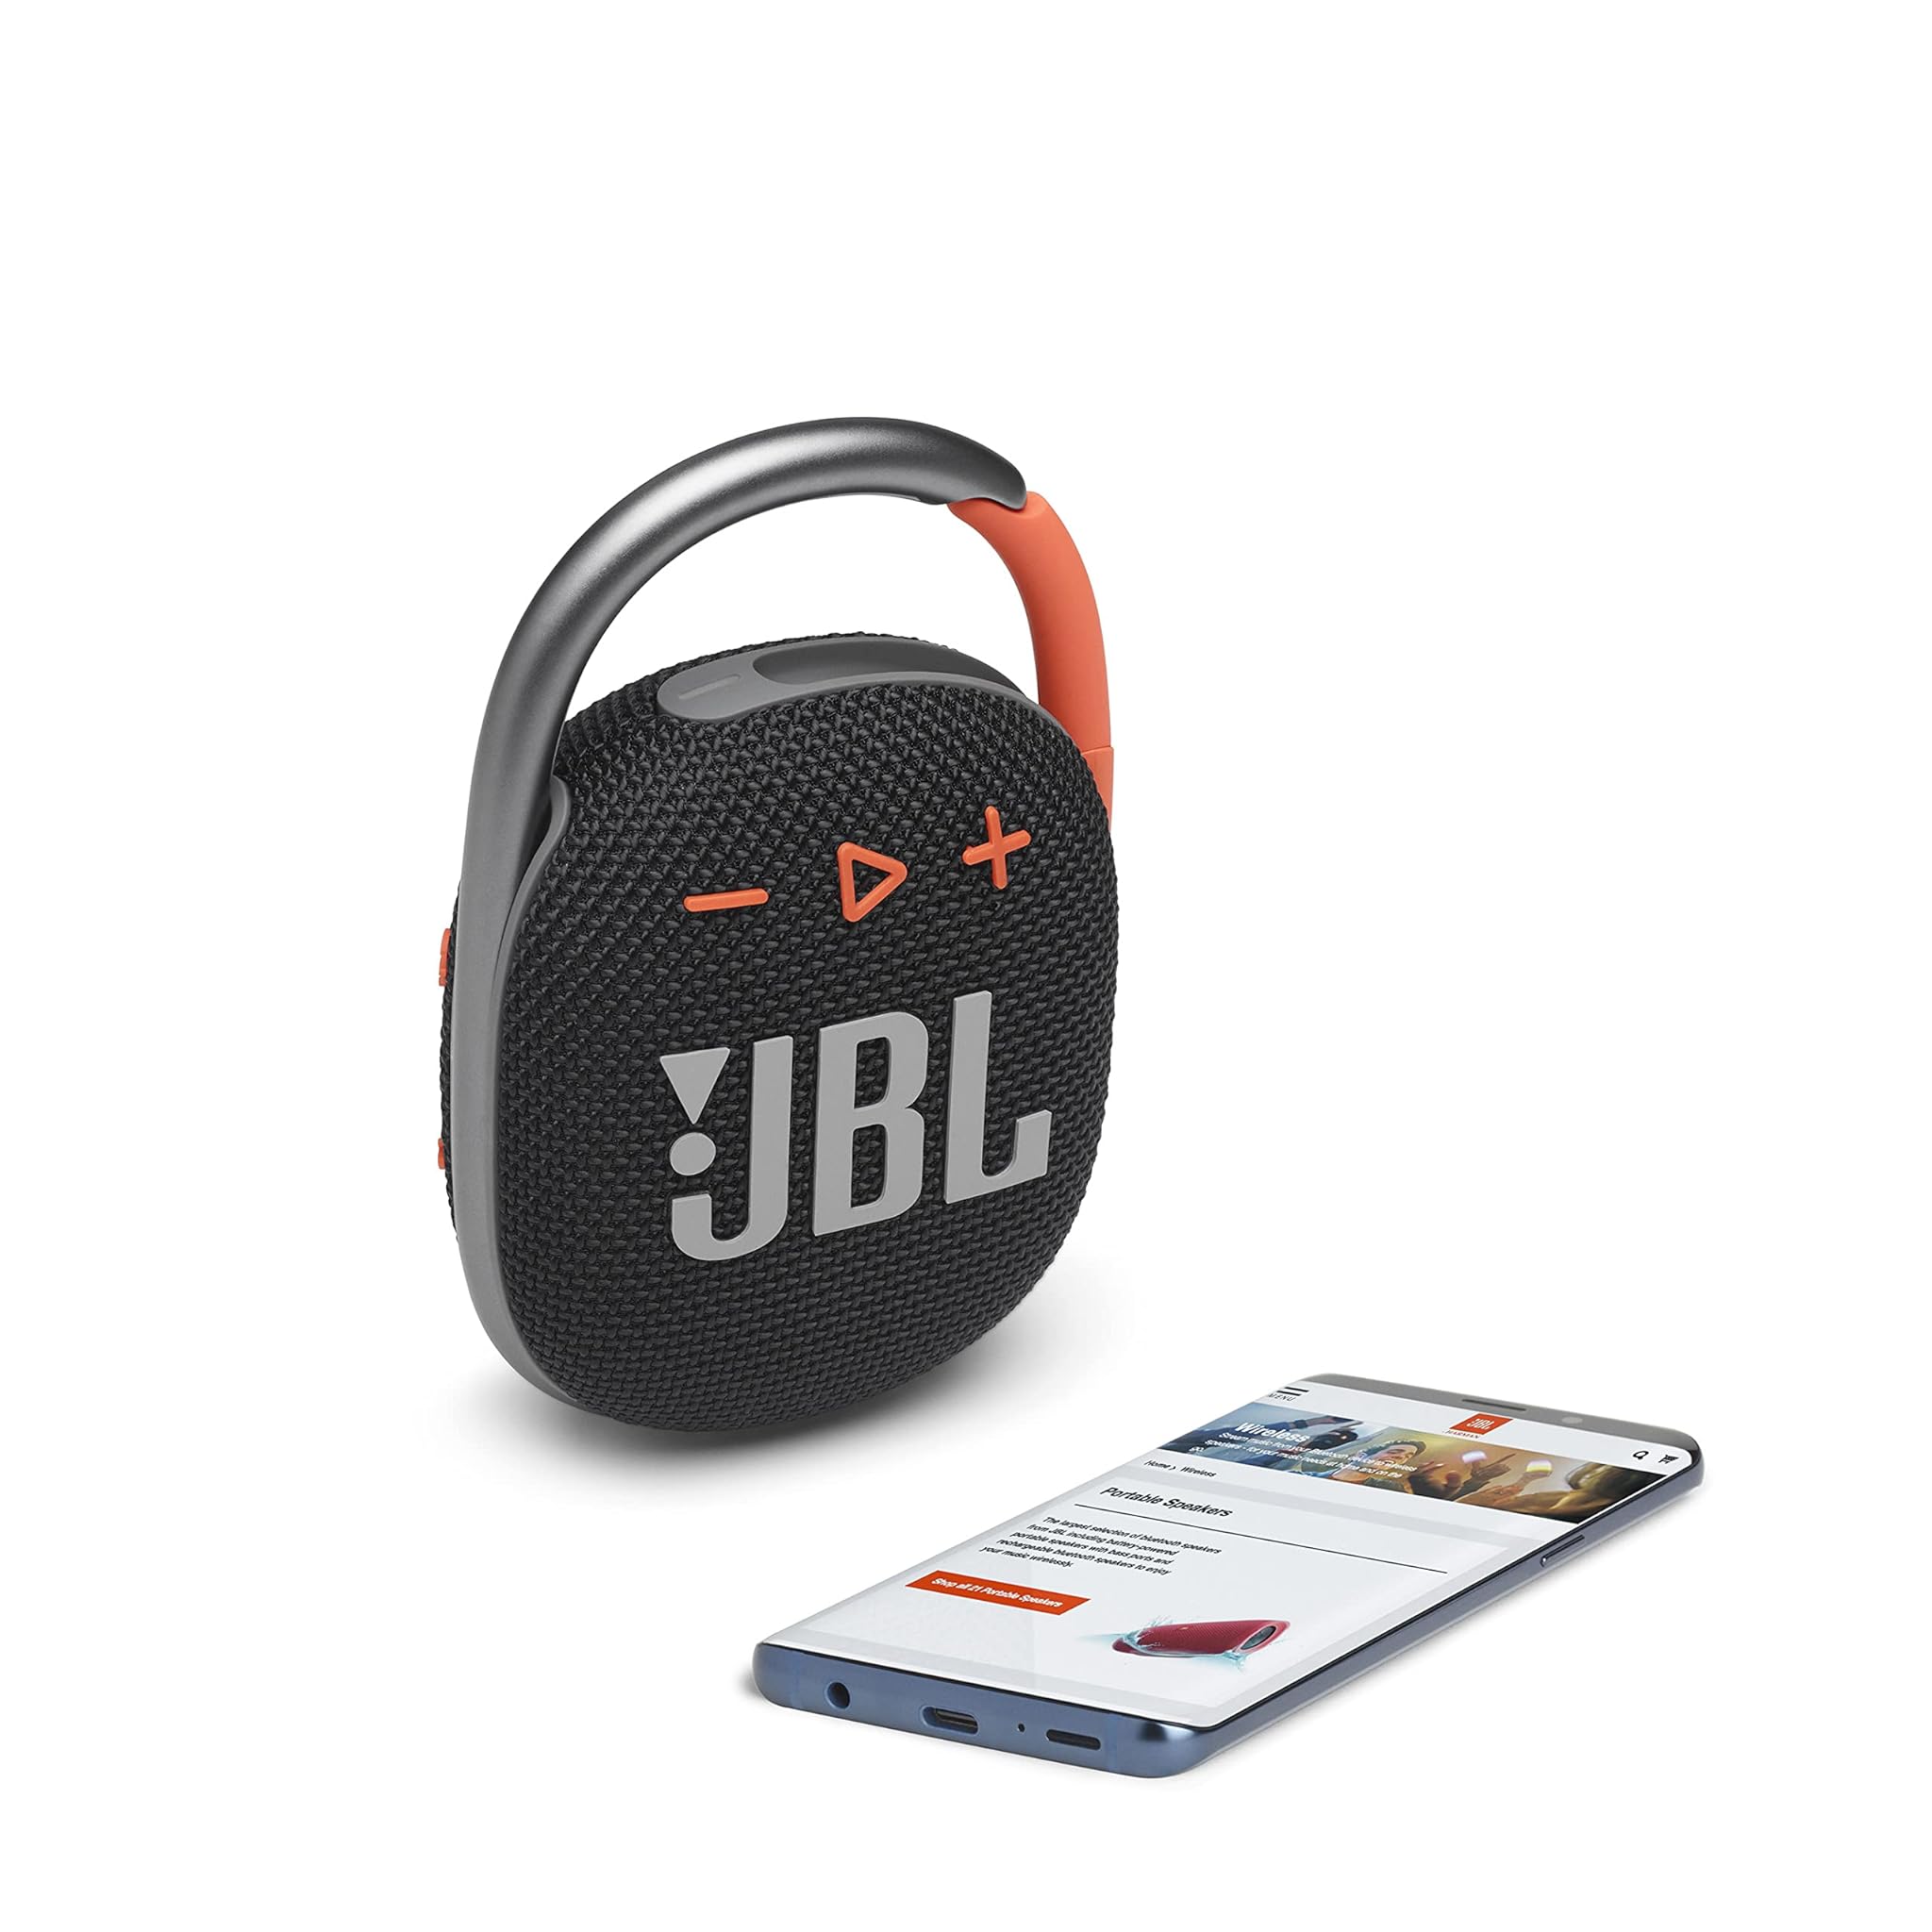 JBL CLIP 4 Blue tooth speaker